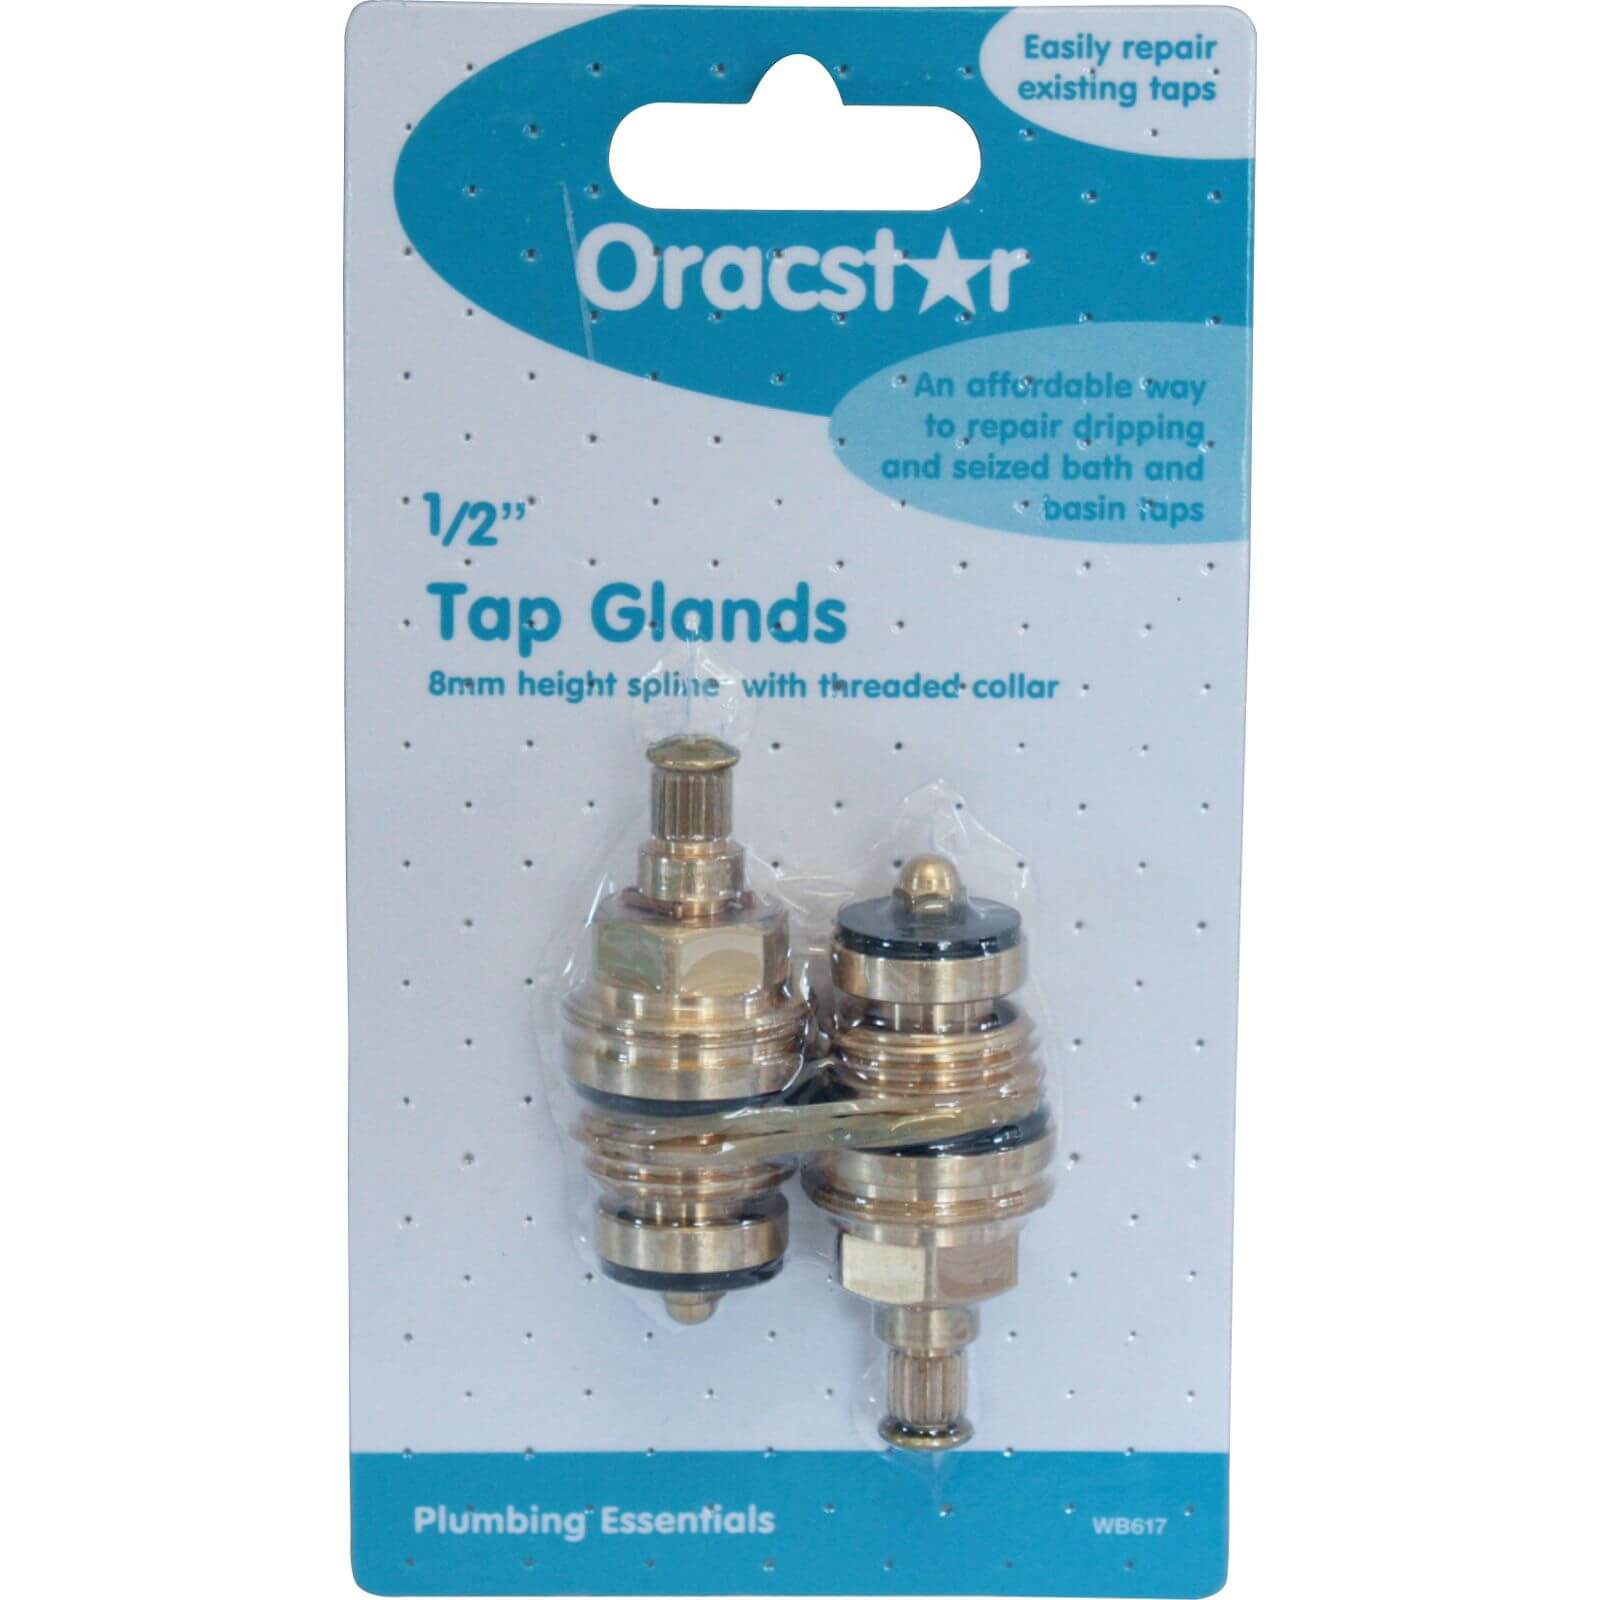 Oracstar 1/2 inch Tap Gland 8mm Spline Tread Collar